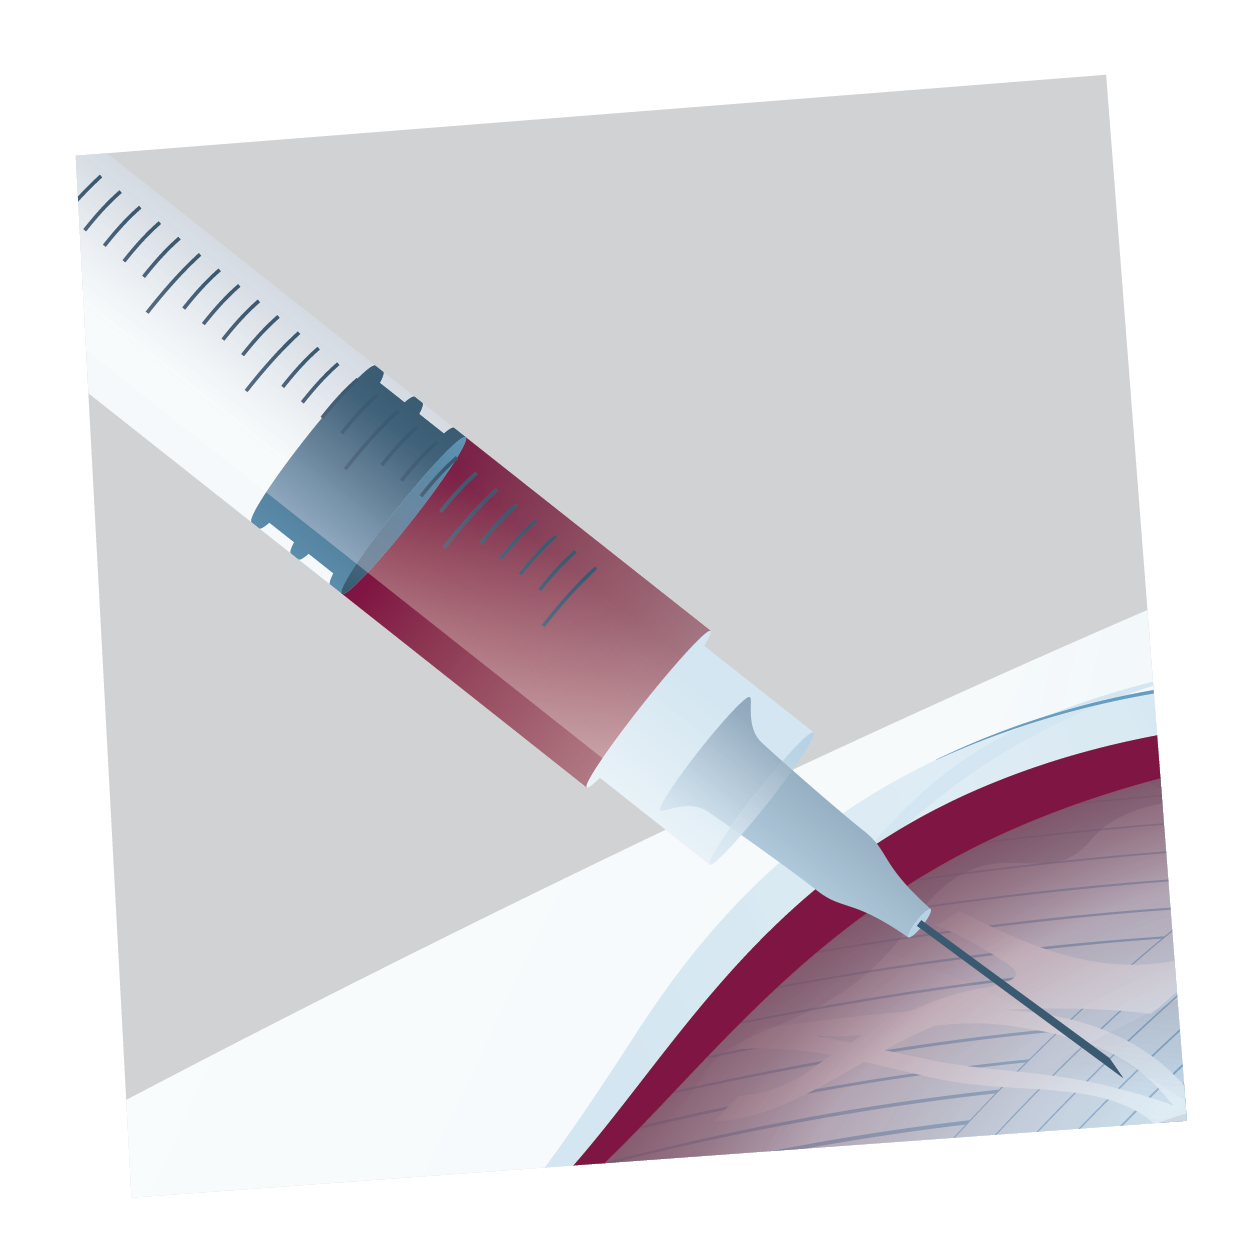 Probudur injection icon